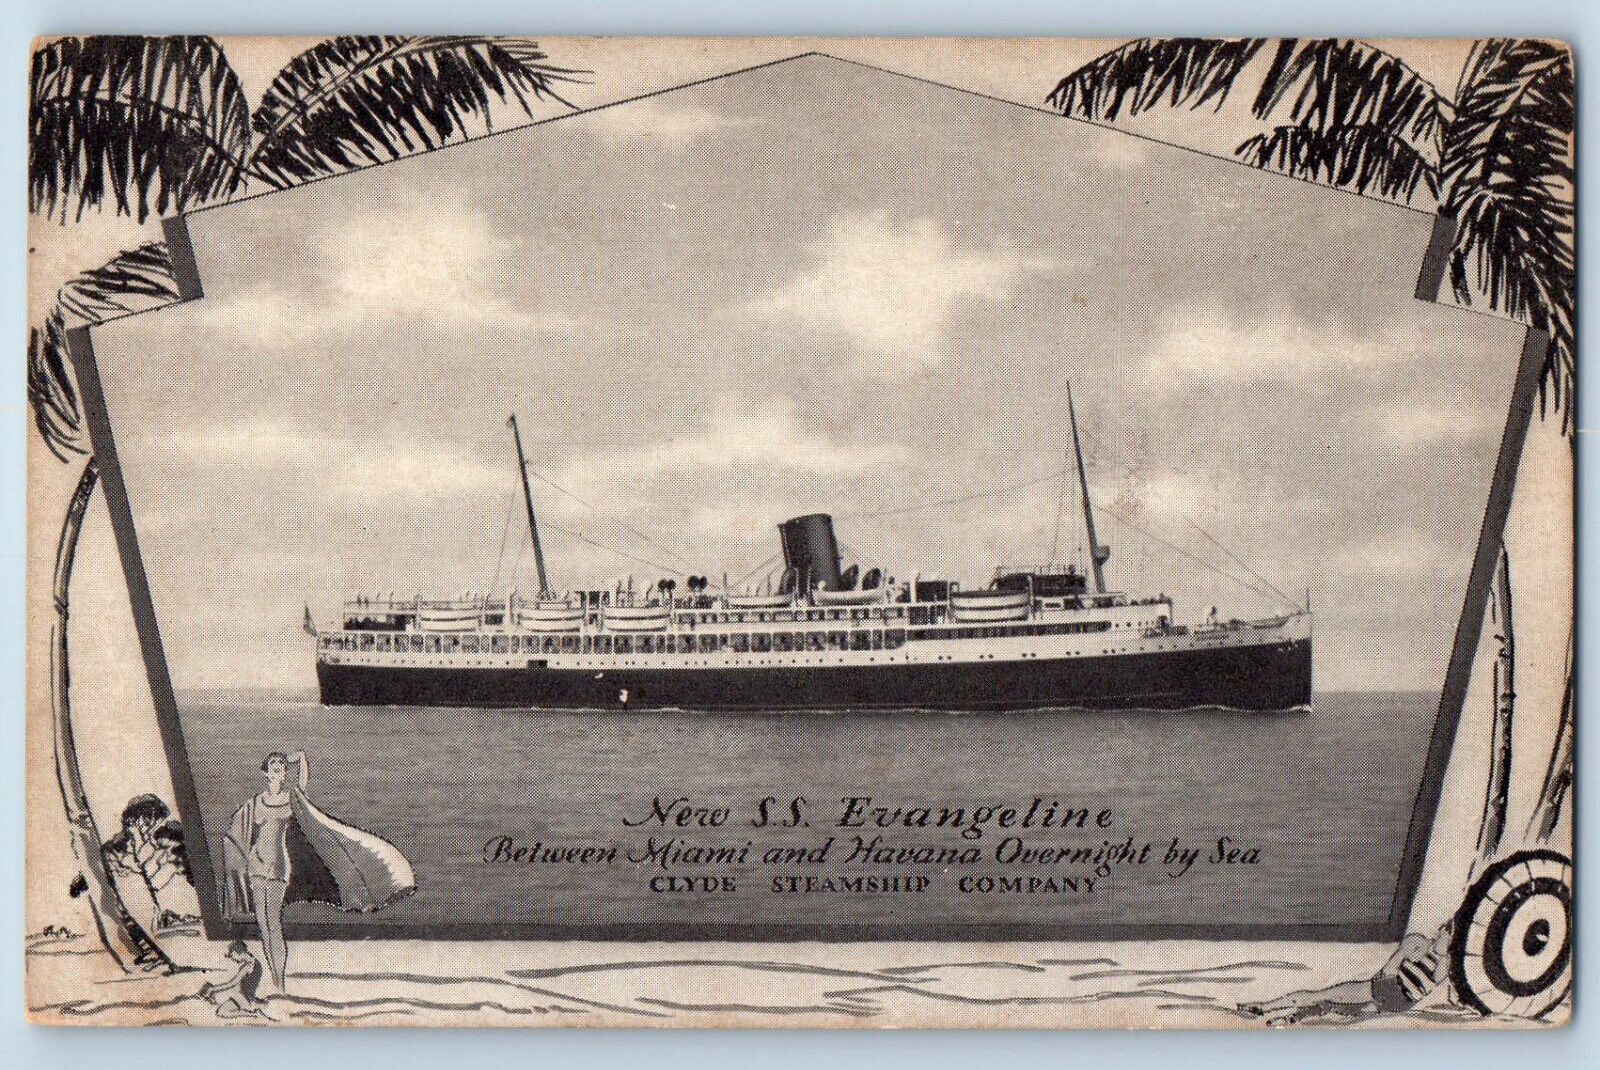 Havana Cuba Postcard New S.S. Evangeline Clyde Steamship Co. c1910 Antique